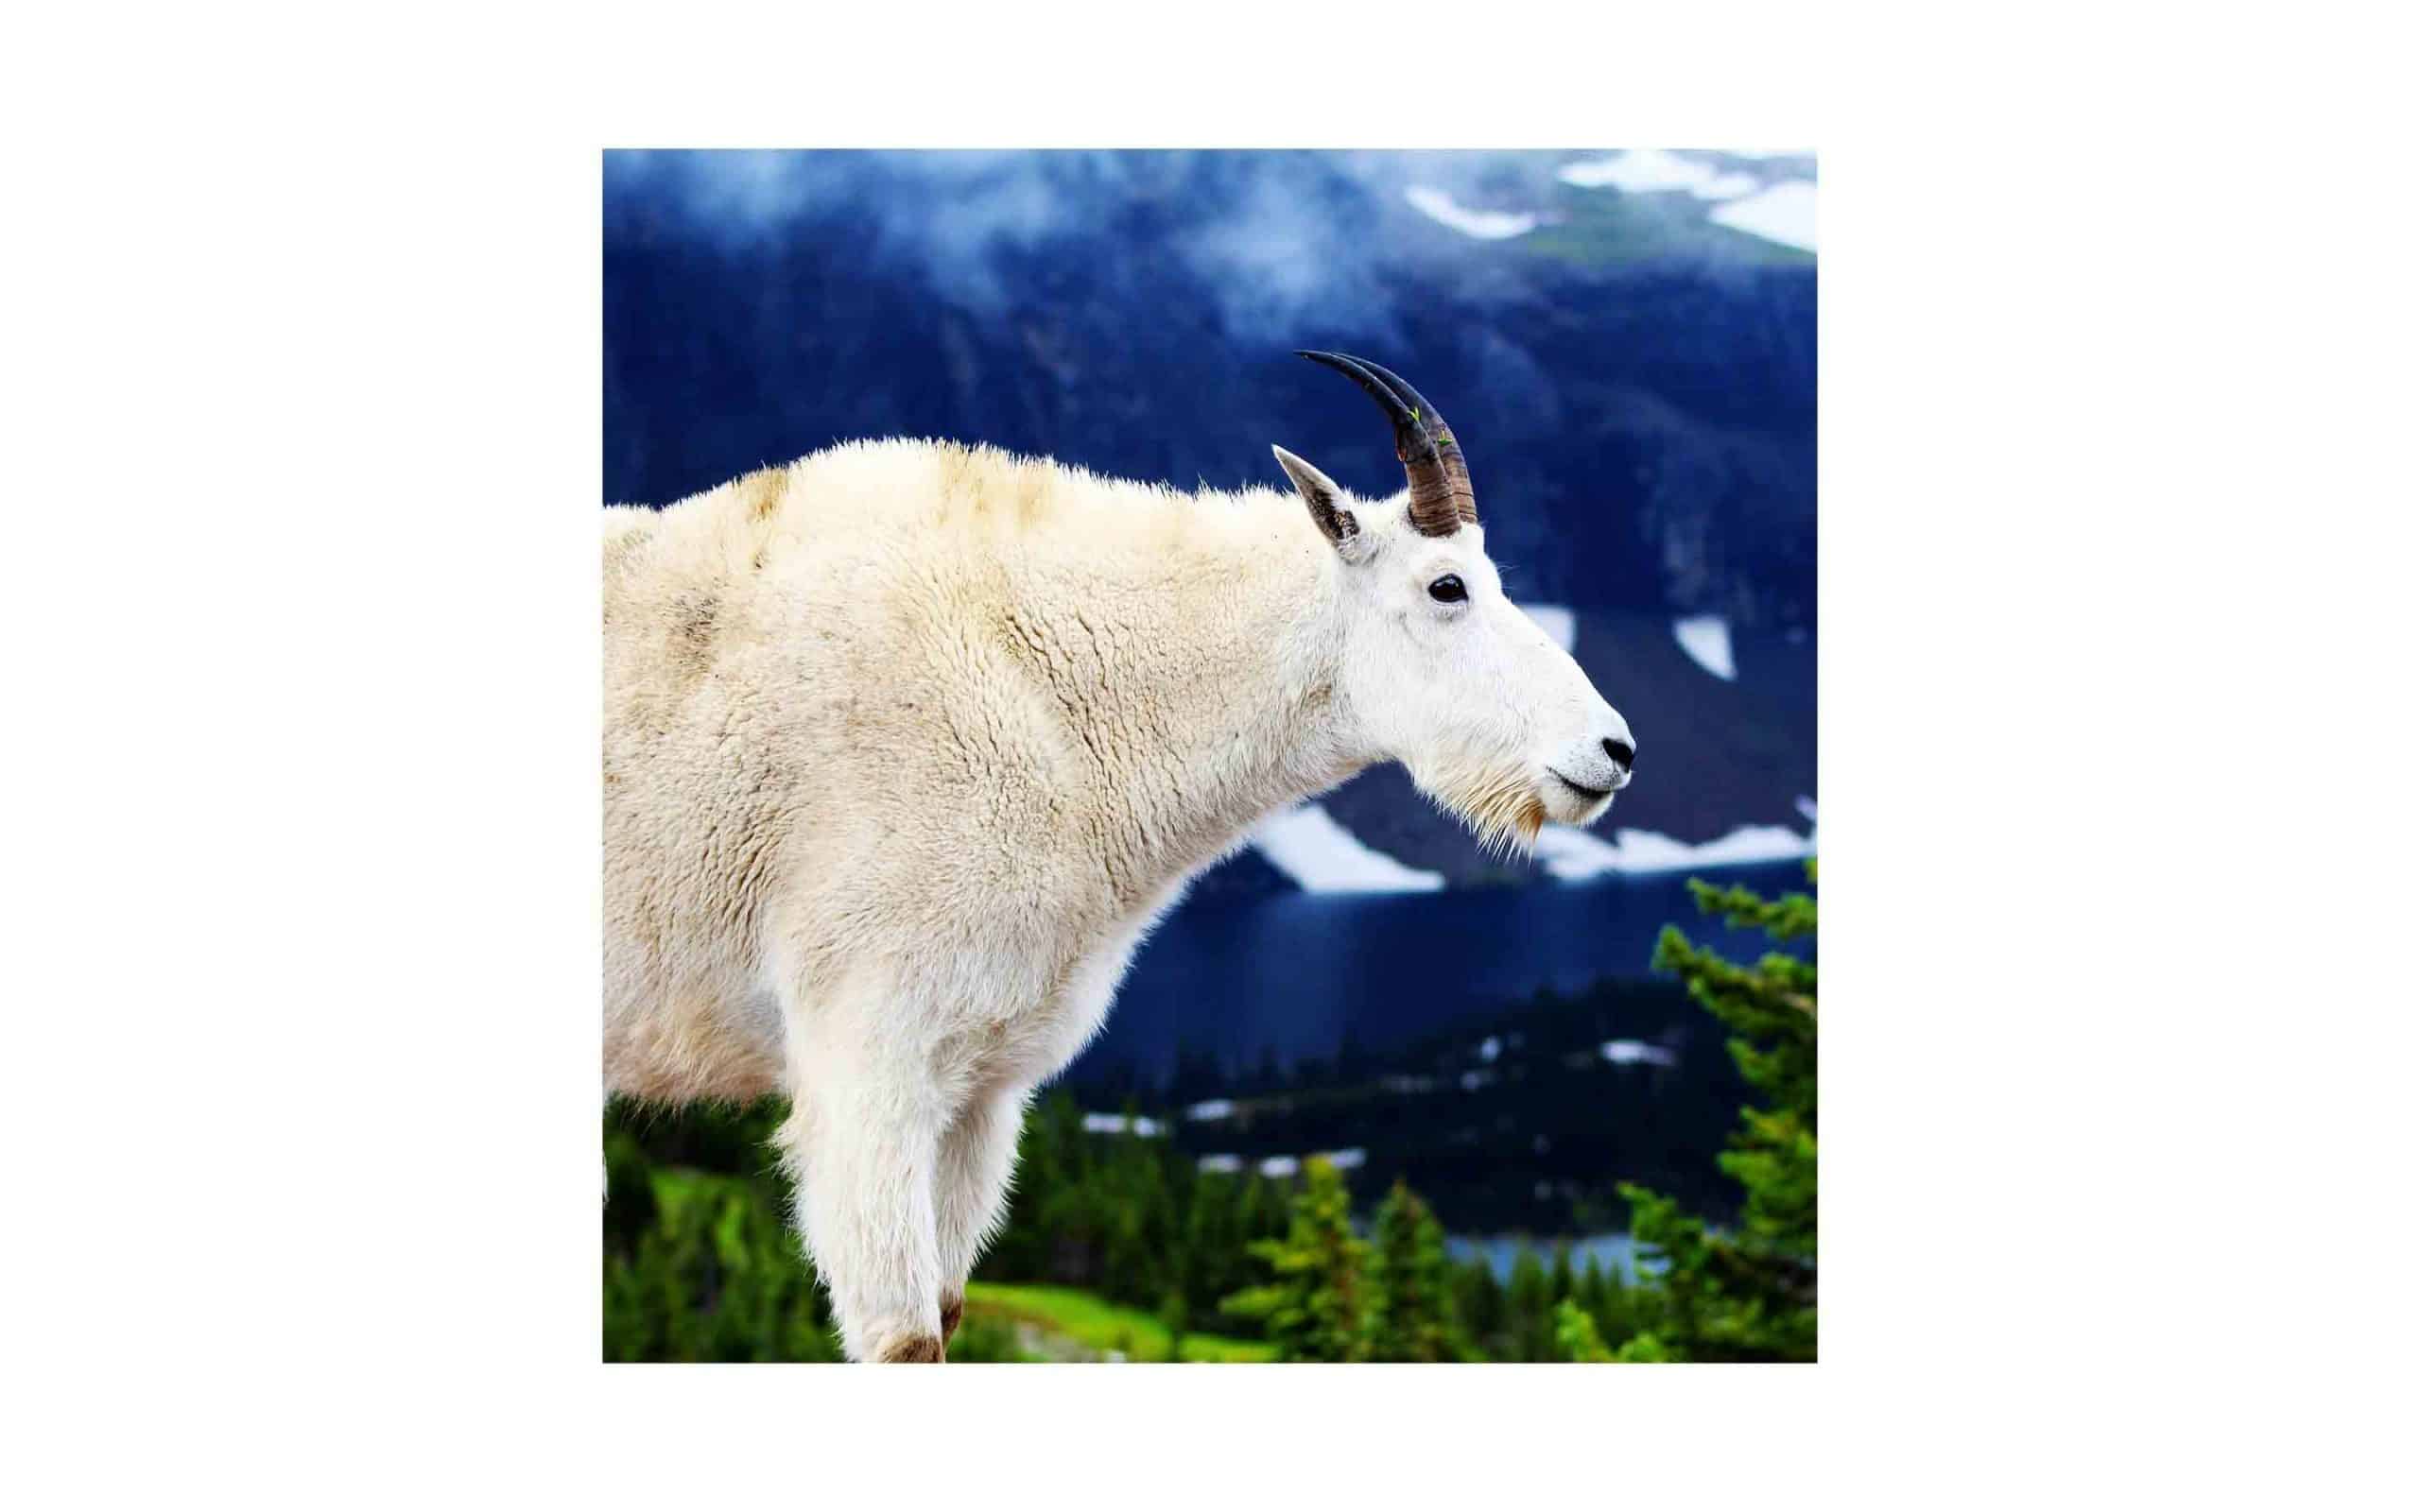 nv-mountain-goat-Rex-Wolferman.jpg?mtime=20170811134641#asset:6284